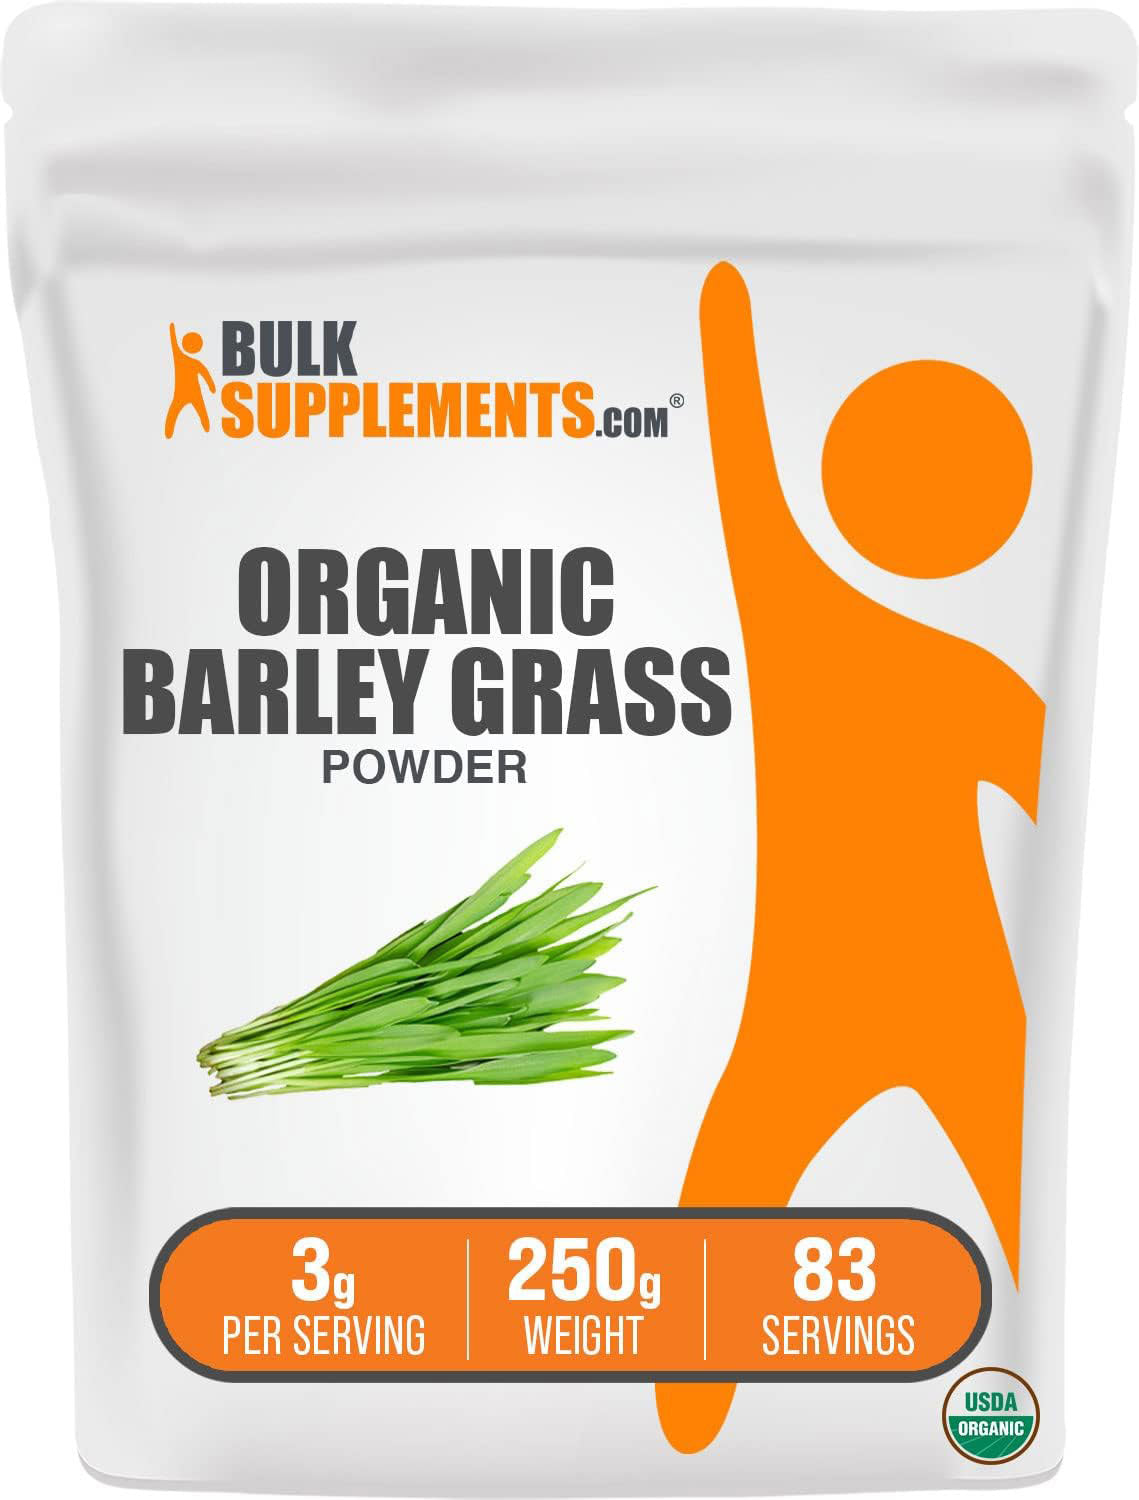 Organic Barley Grass Powder 250g Bag with 83 servings at 3g per serving